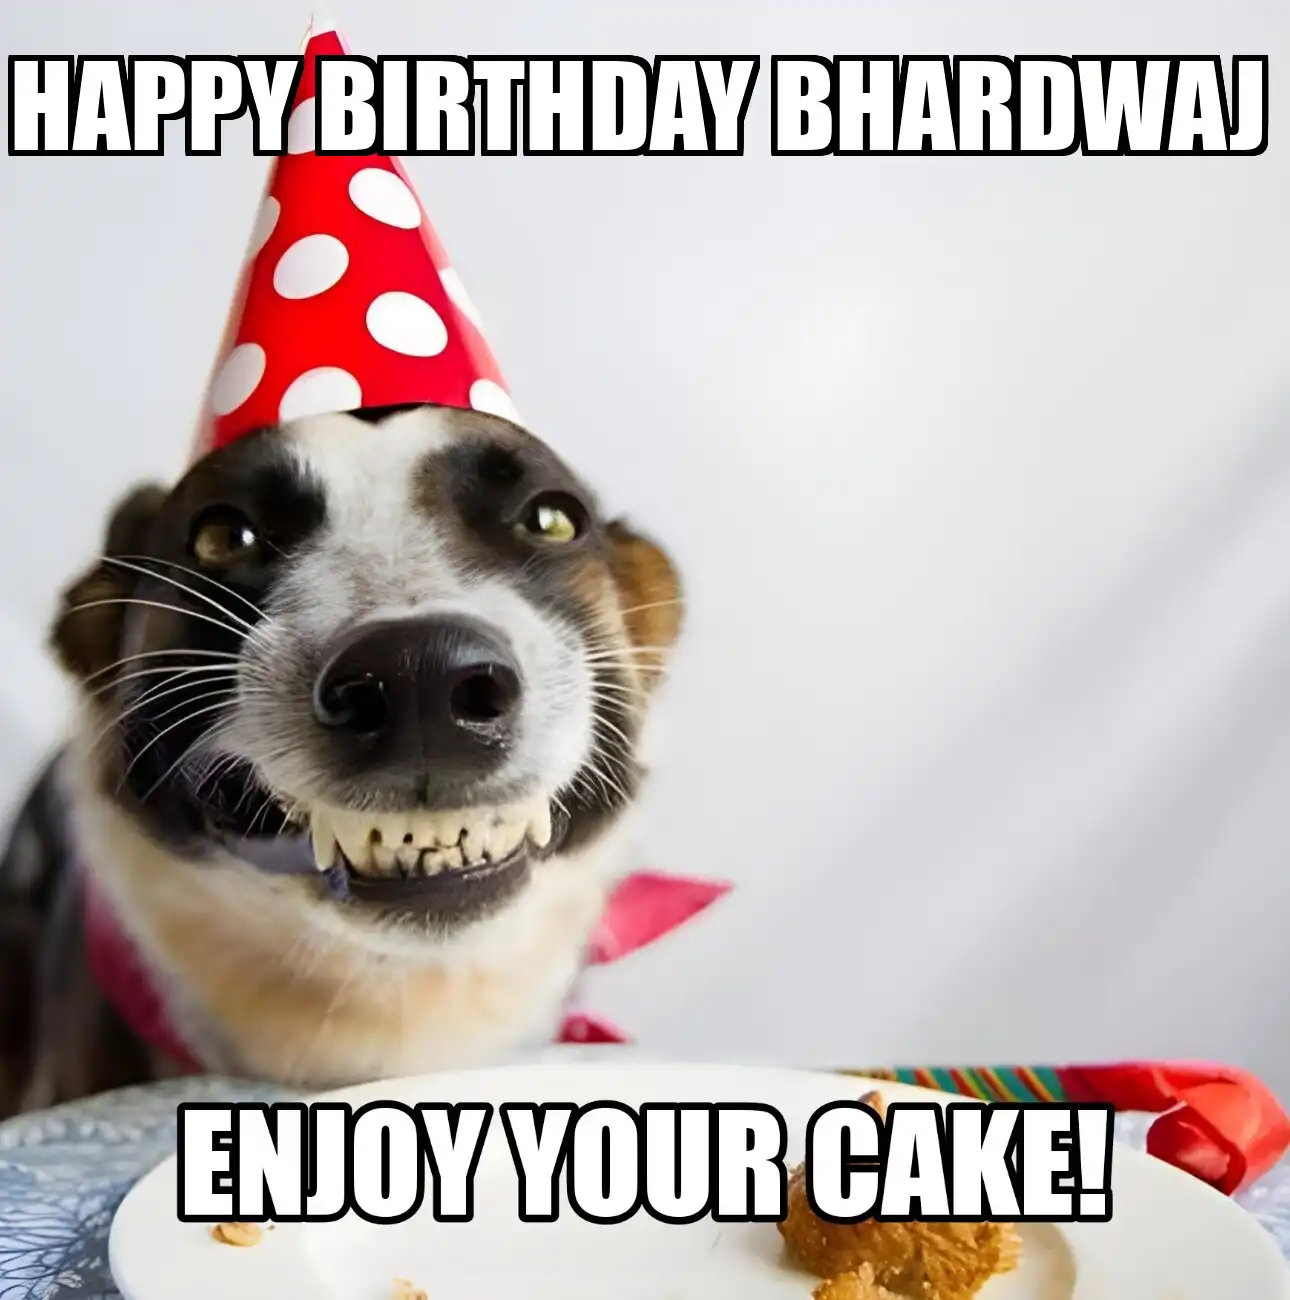 Happy Birthday Bhardwaj Enjoy Your Cake Dog Meme